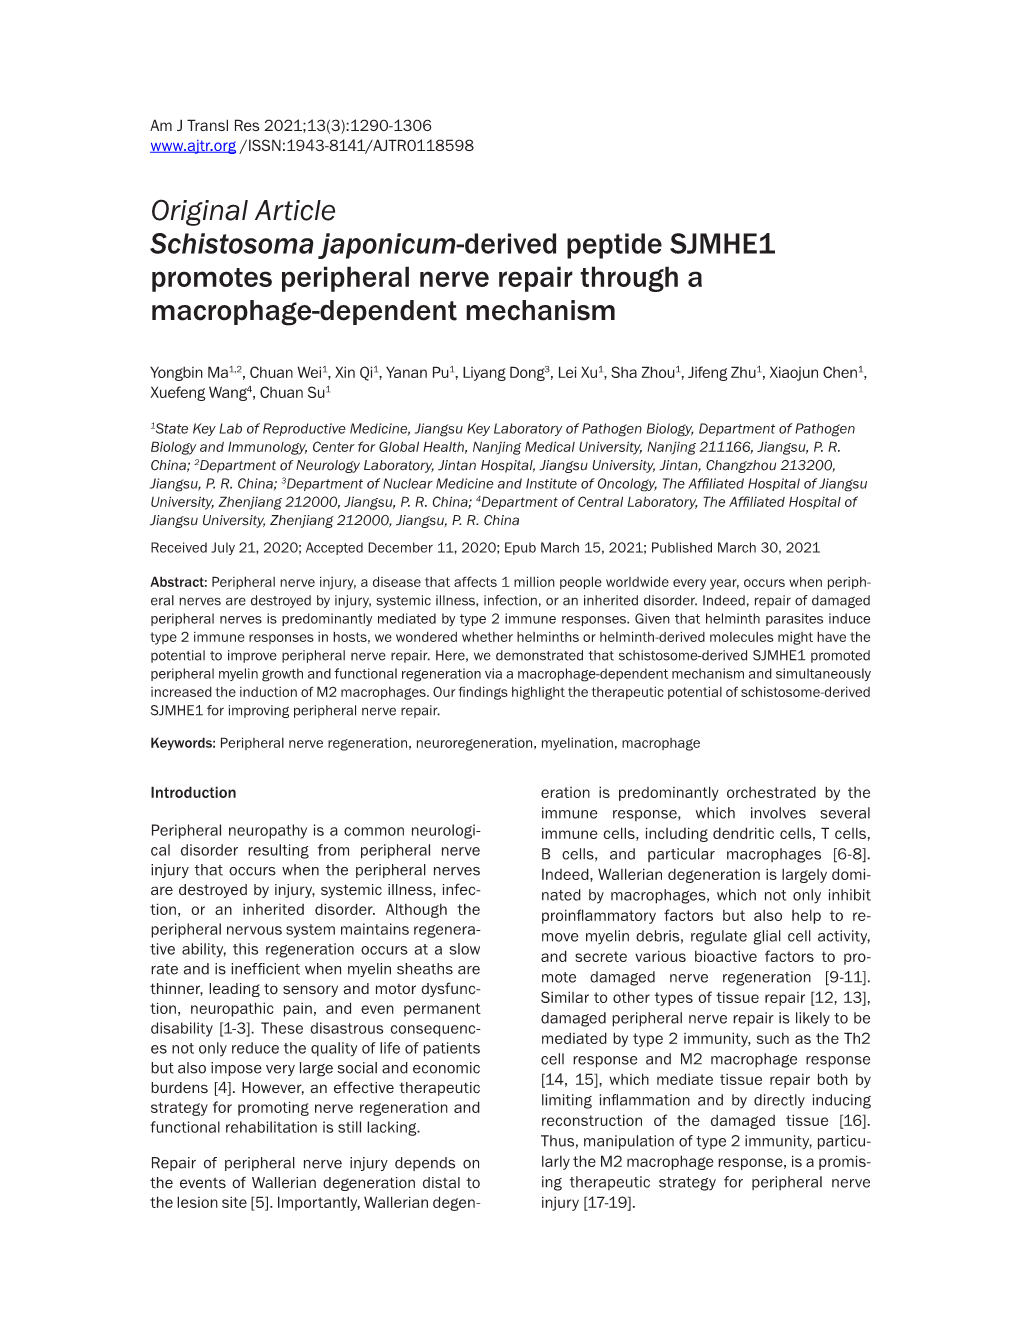 Original Article Schistosoma Japonicum-Derived Peptide SJMHE1 Promotes Peripheral Nerve Repair Through a Macrophage-Dependent Mechanism